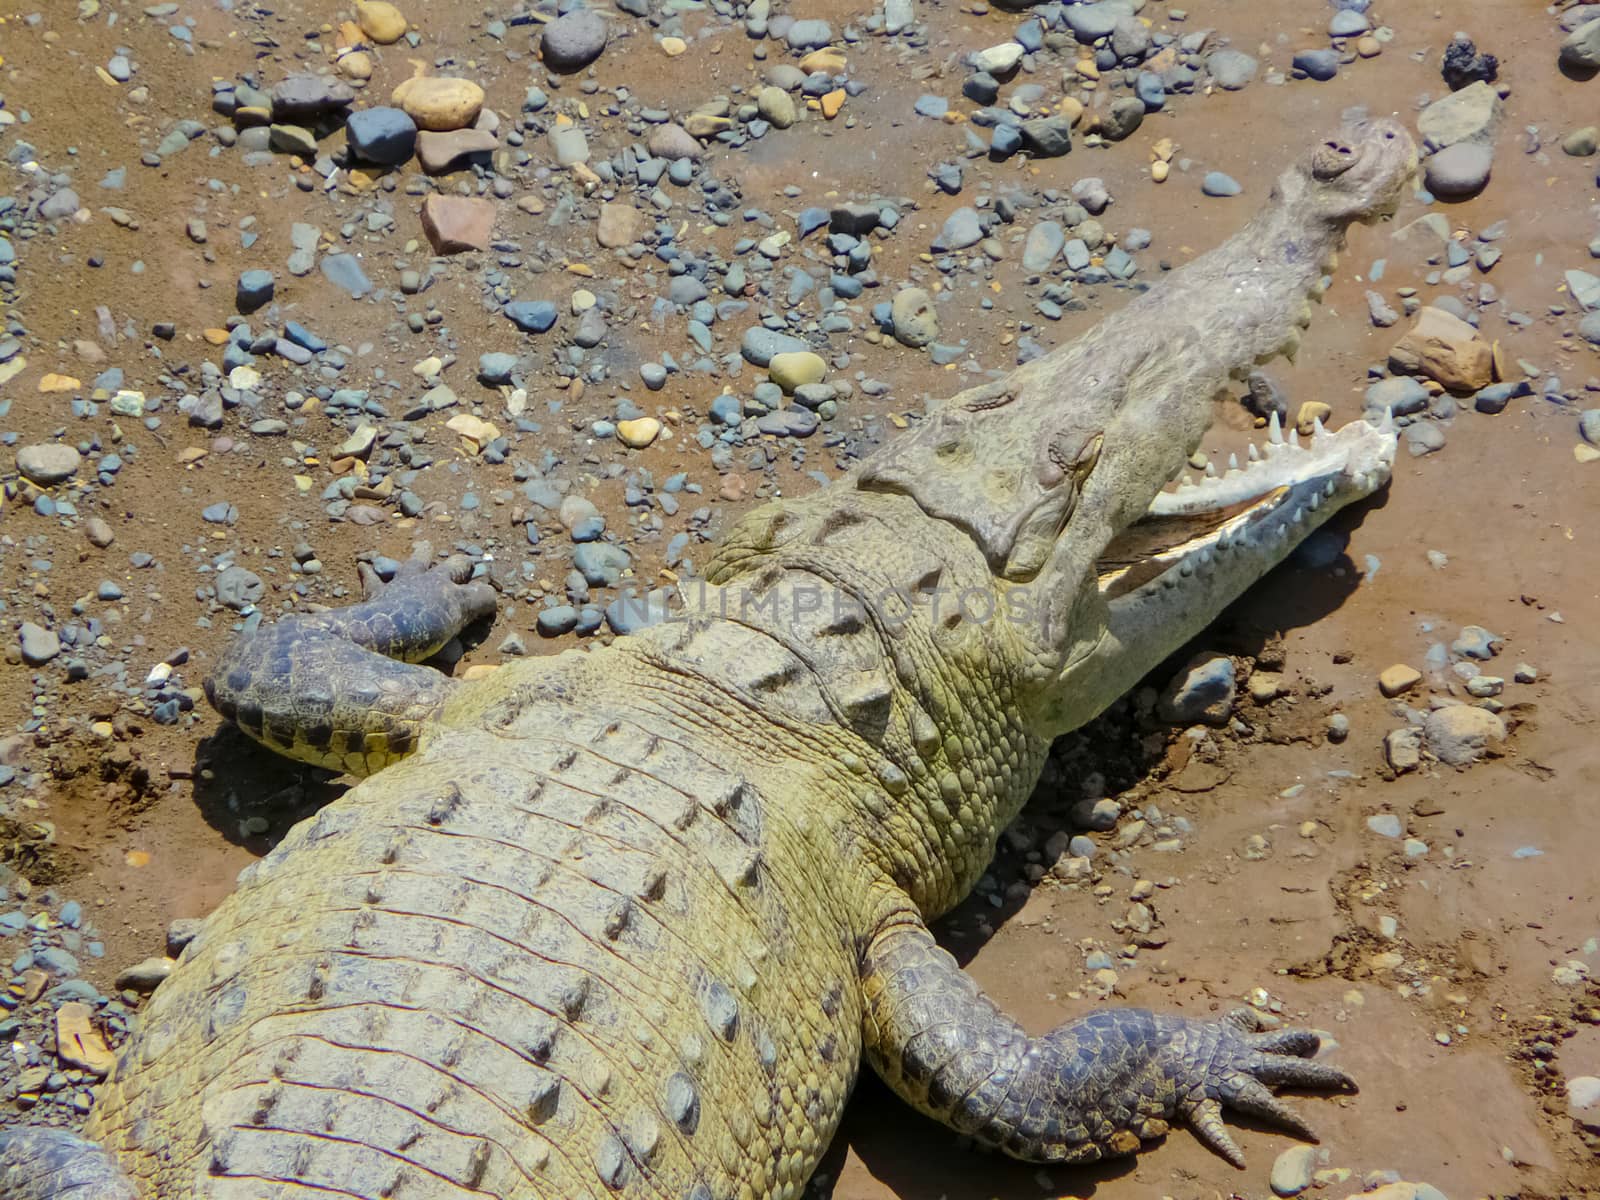 Crocodile, Tarcoles River, Alajuela by nicousnake